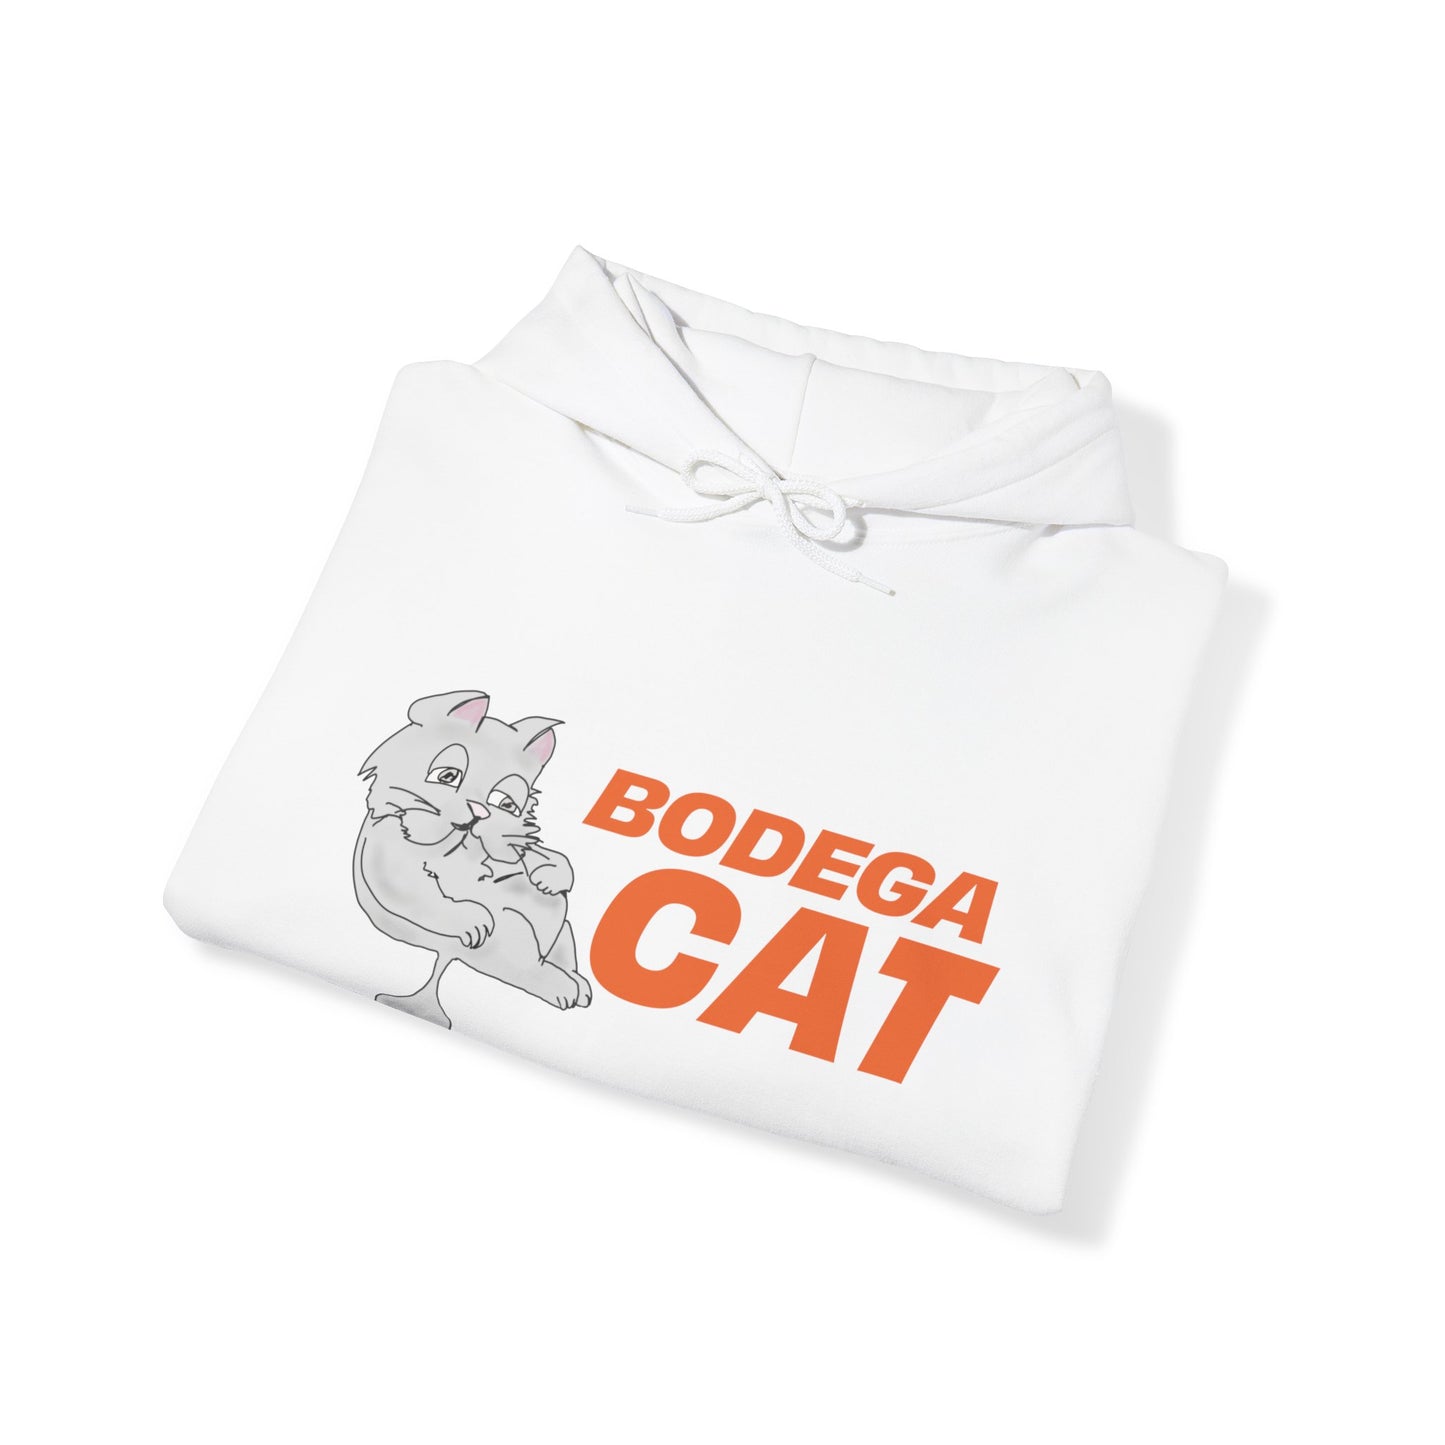 Bodega Cat Sweatshirt